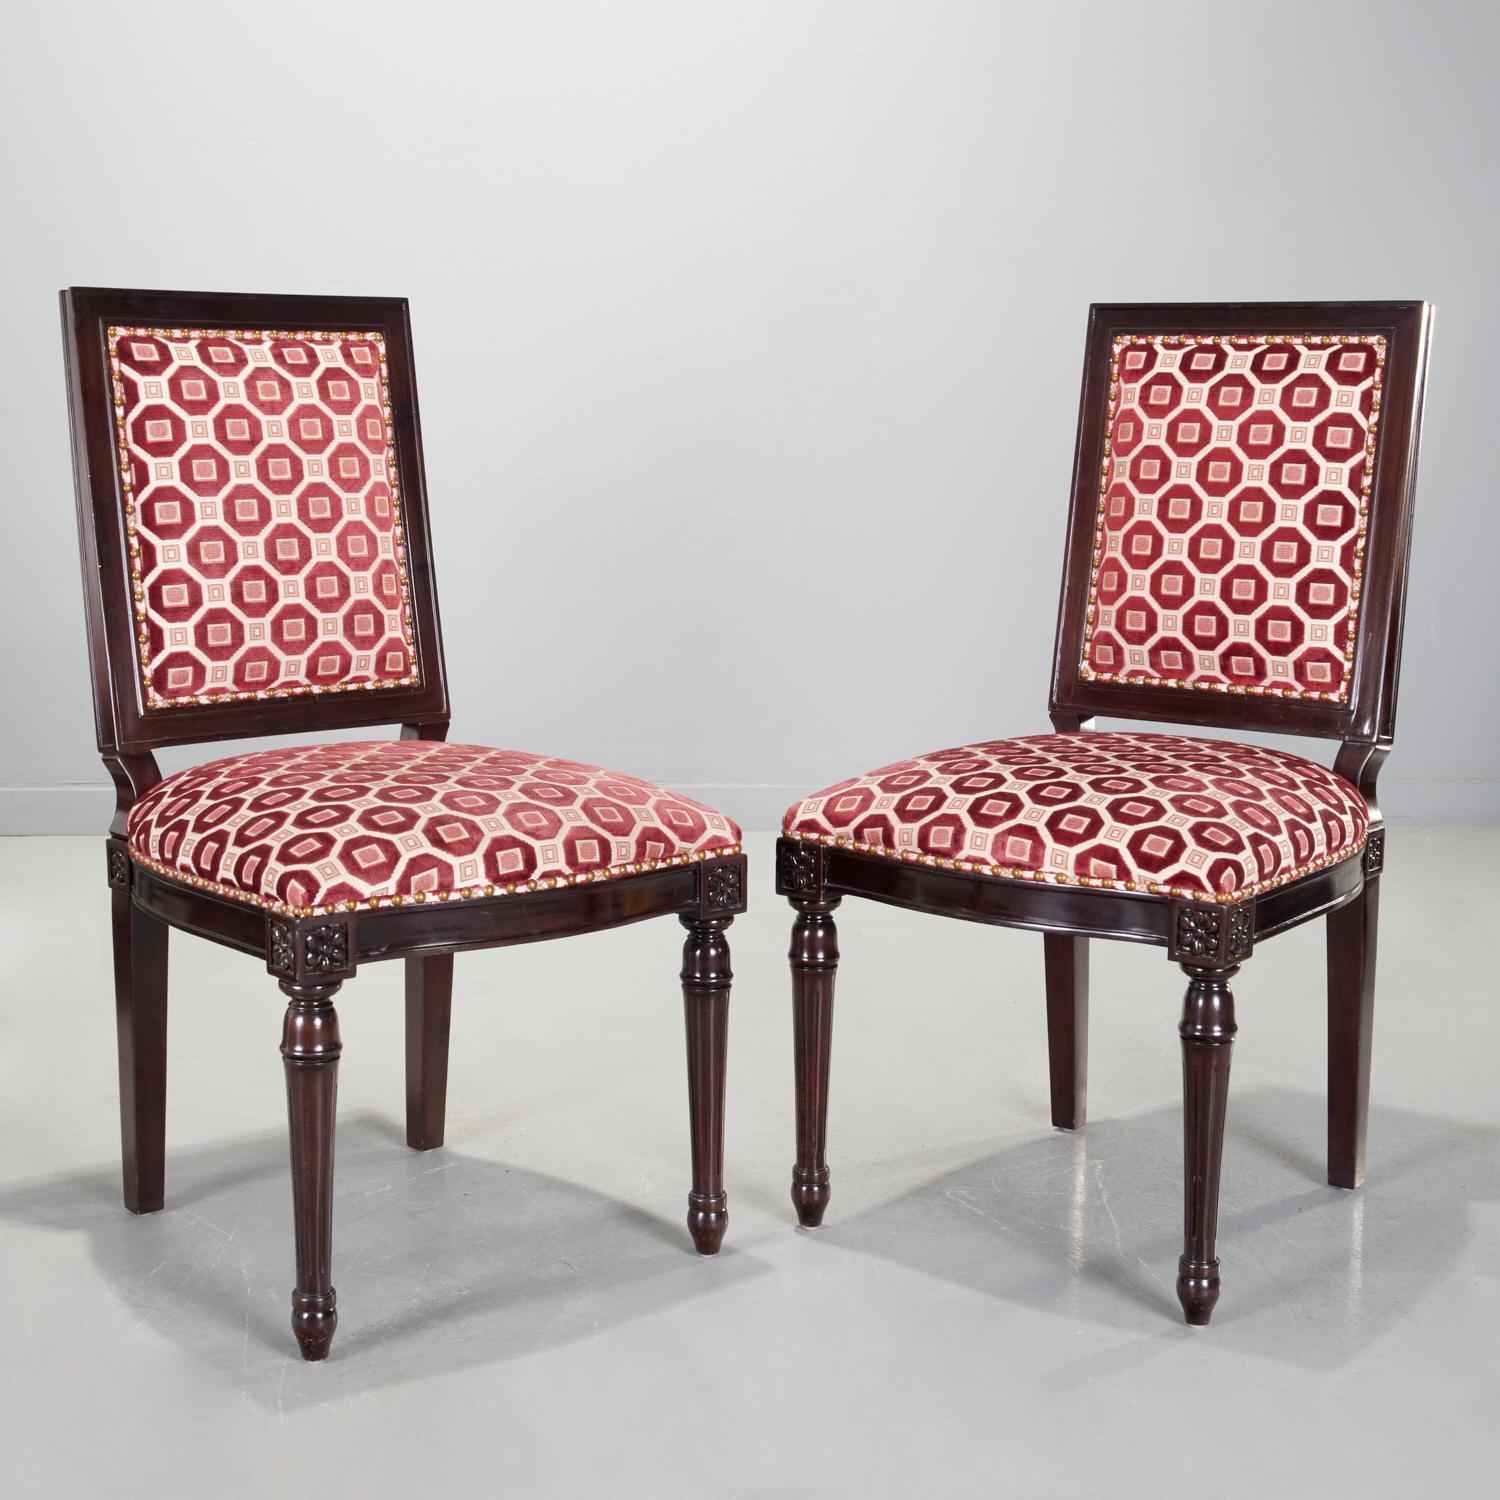 Pair Oly Studio Louis XVI Style Chairs Upholstered in Geometric Cut Velvet 1